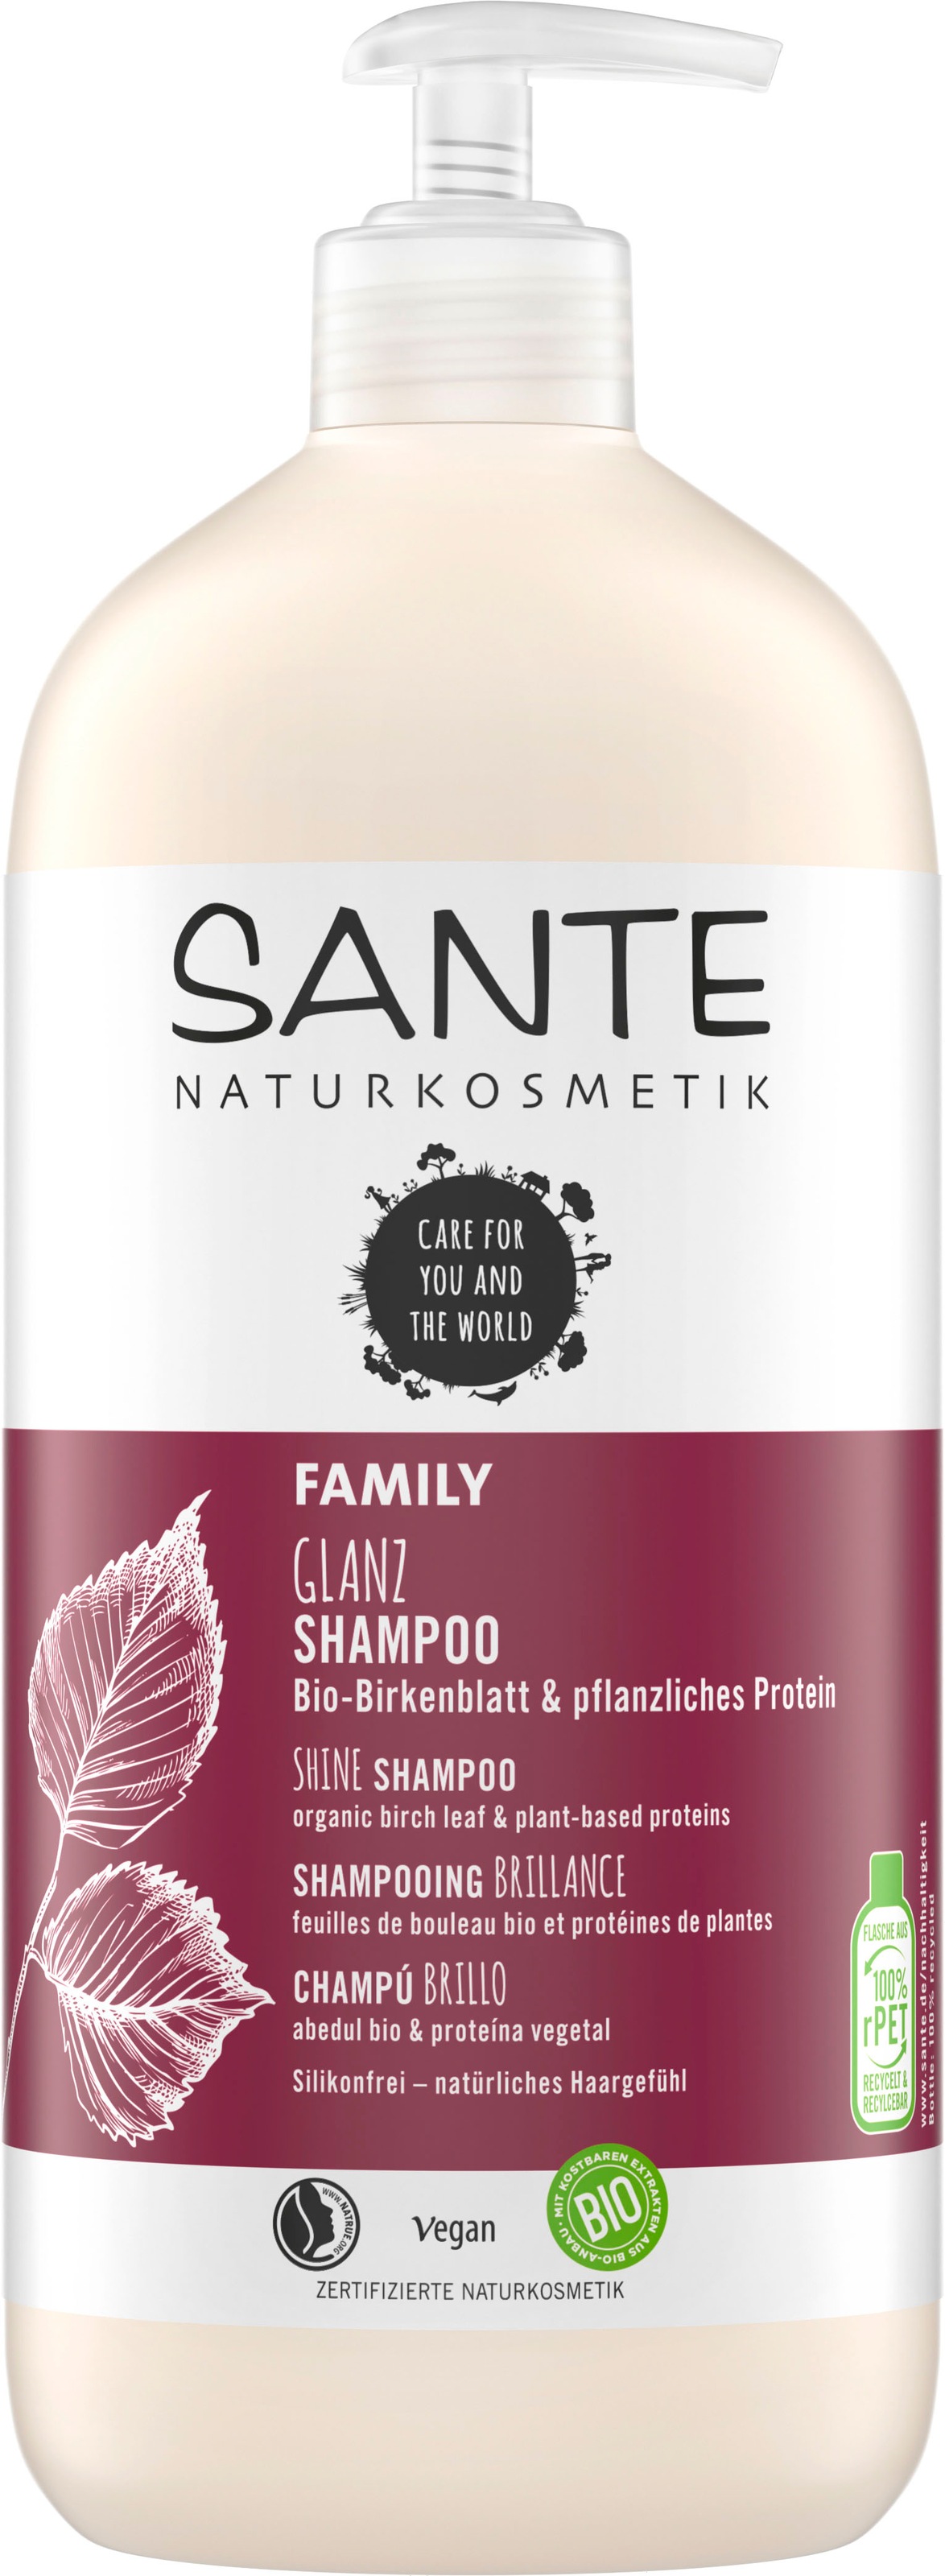 SANTE »FAMILY Glanz Shampoo« ♕ bei Haarshampoo